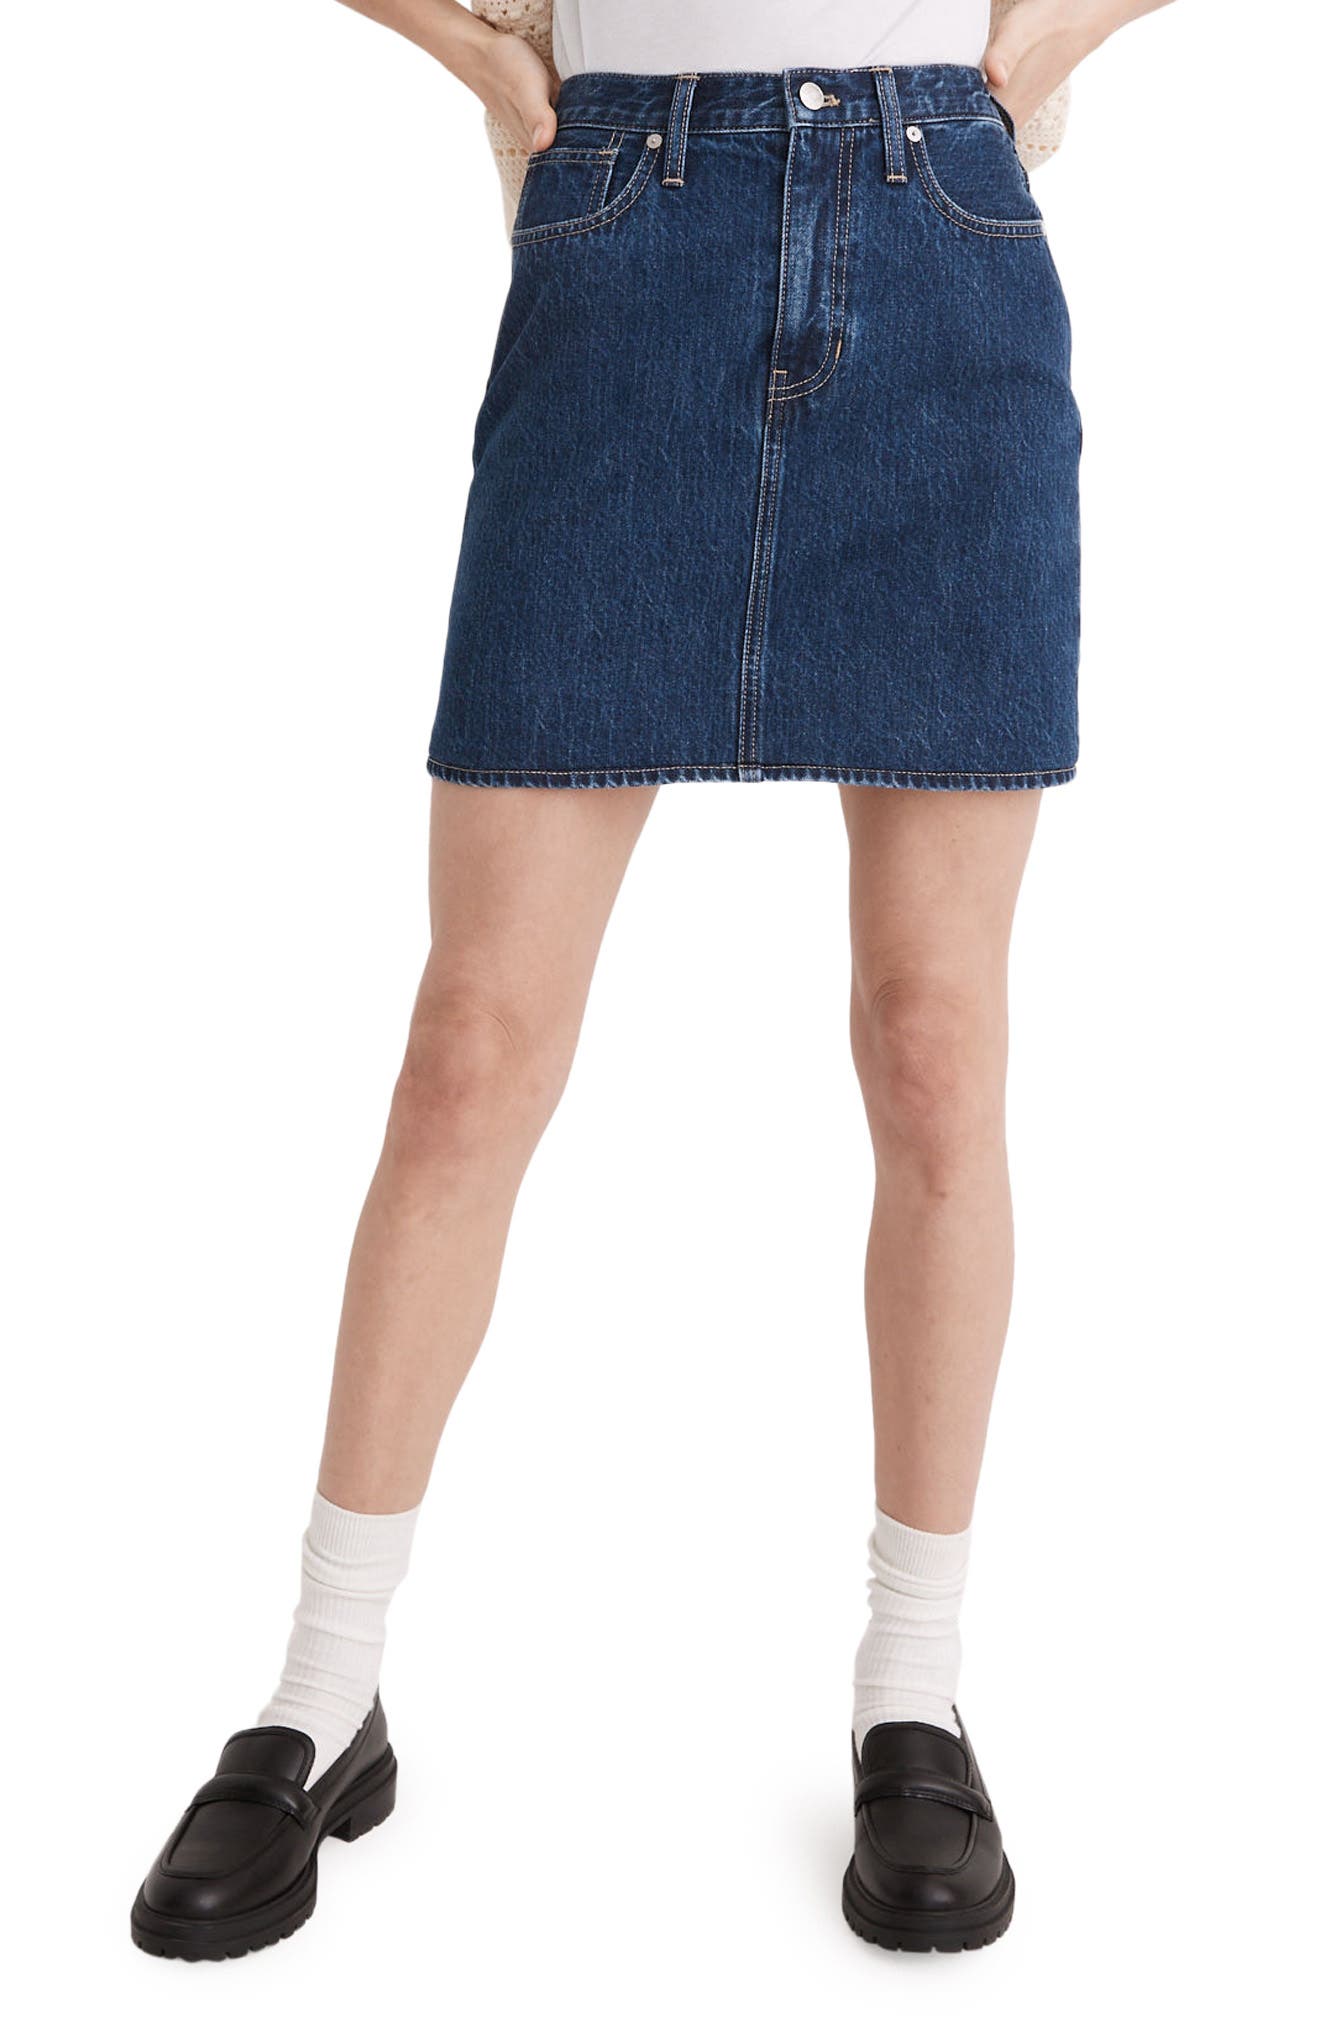 darkwash Stretch Maxi Skirt UK 8-20 High Waist Long Denim Skirt 